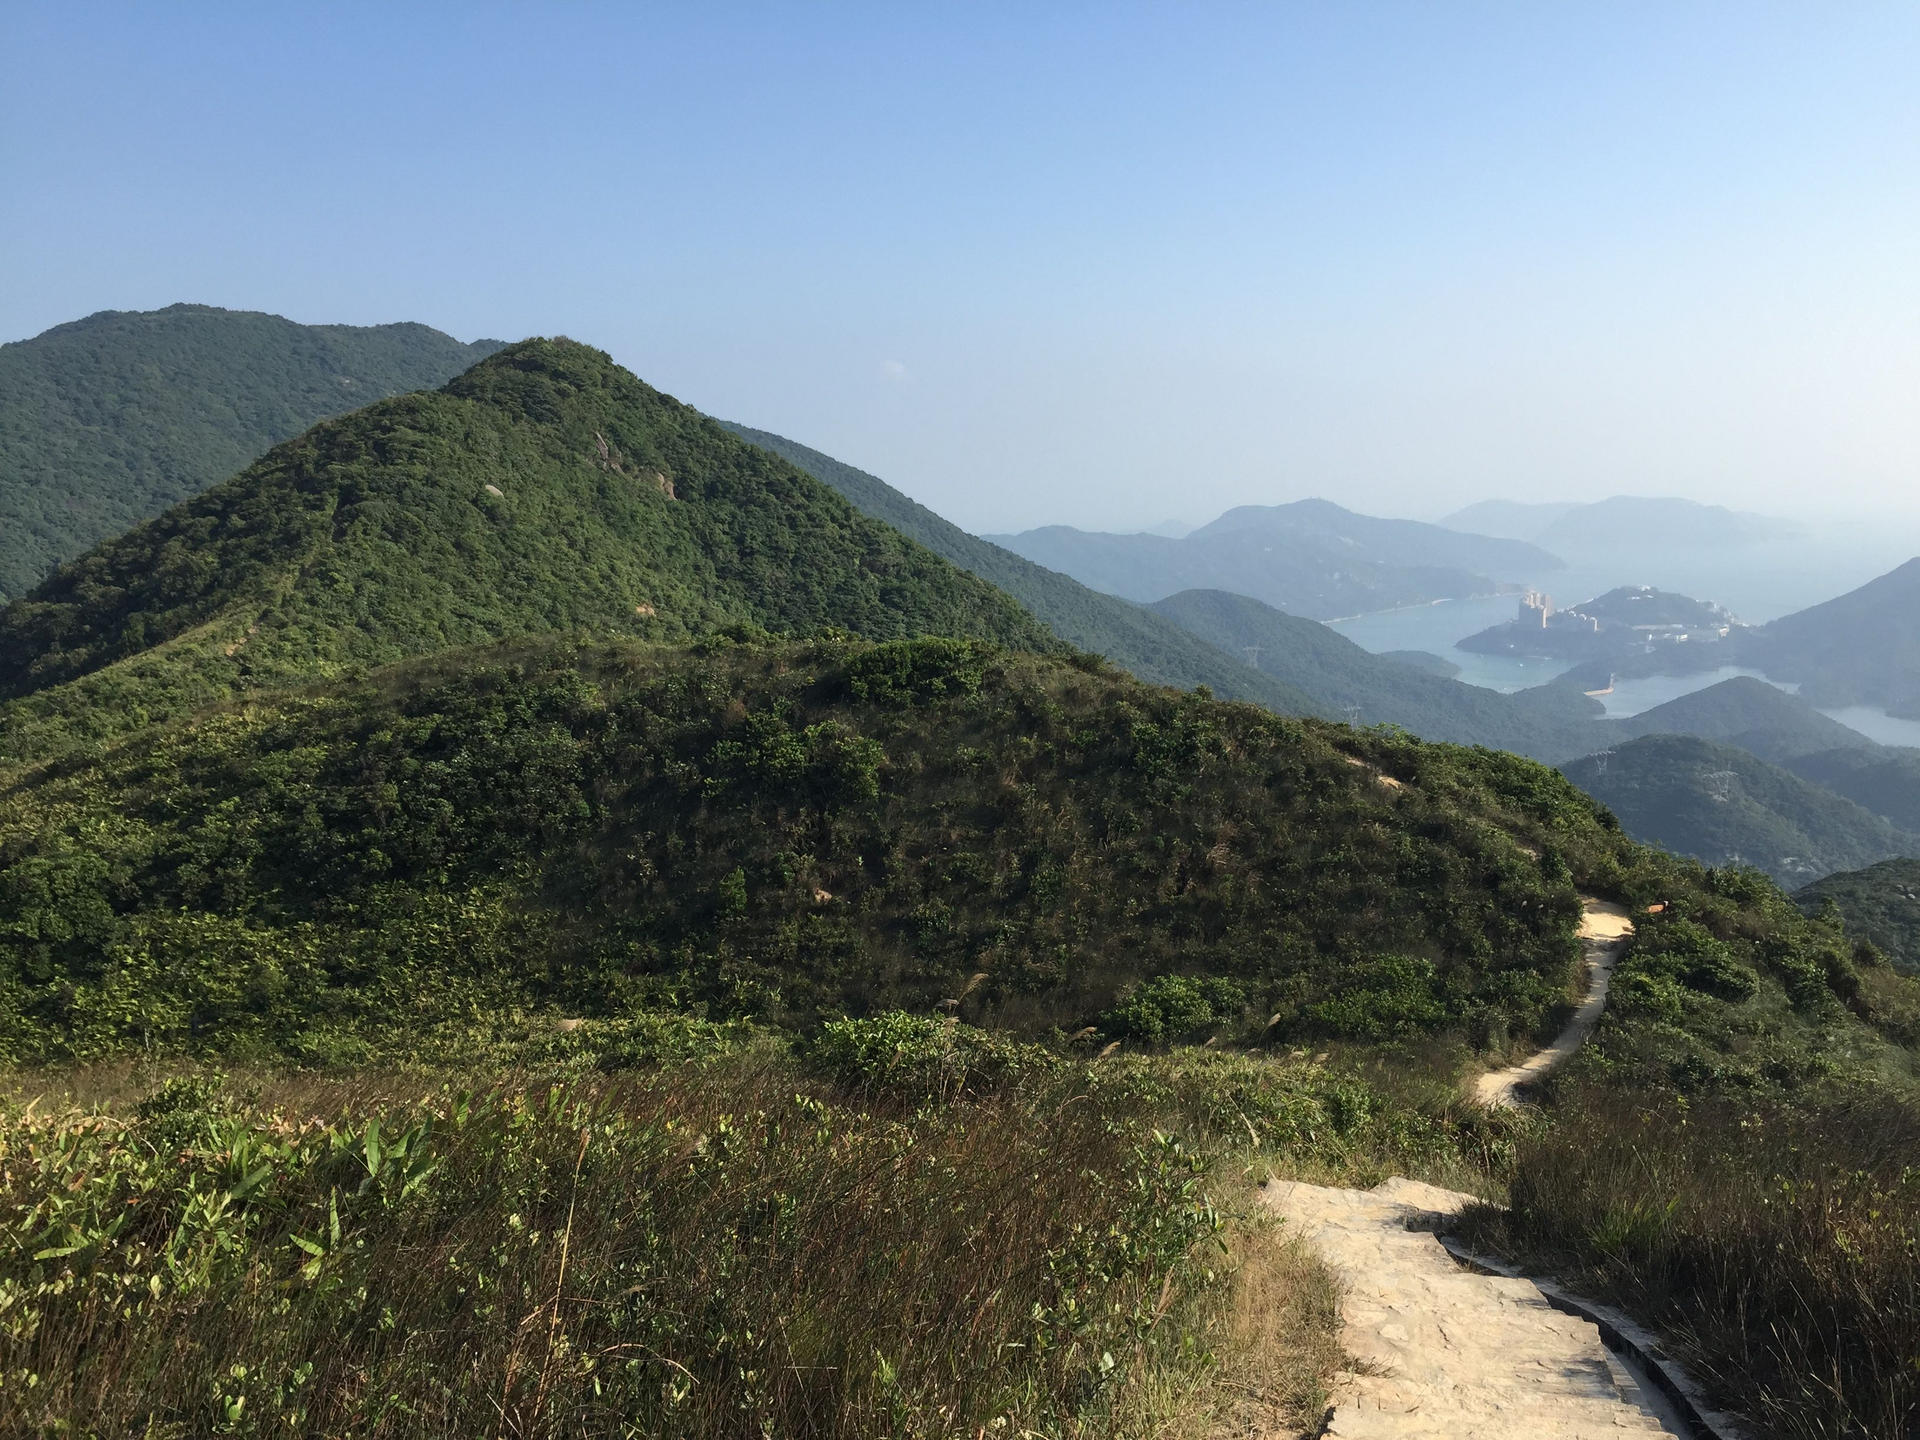 The path towards Mount Butler. Photos: Jeri Chua